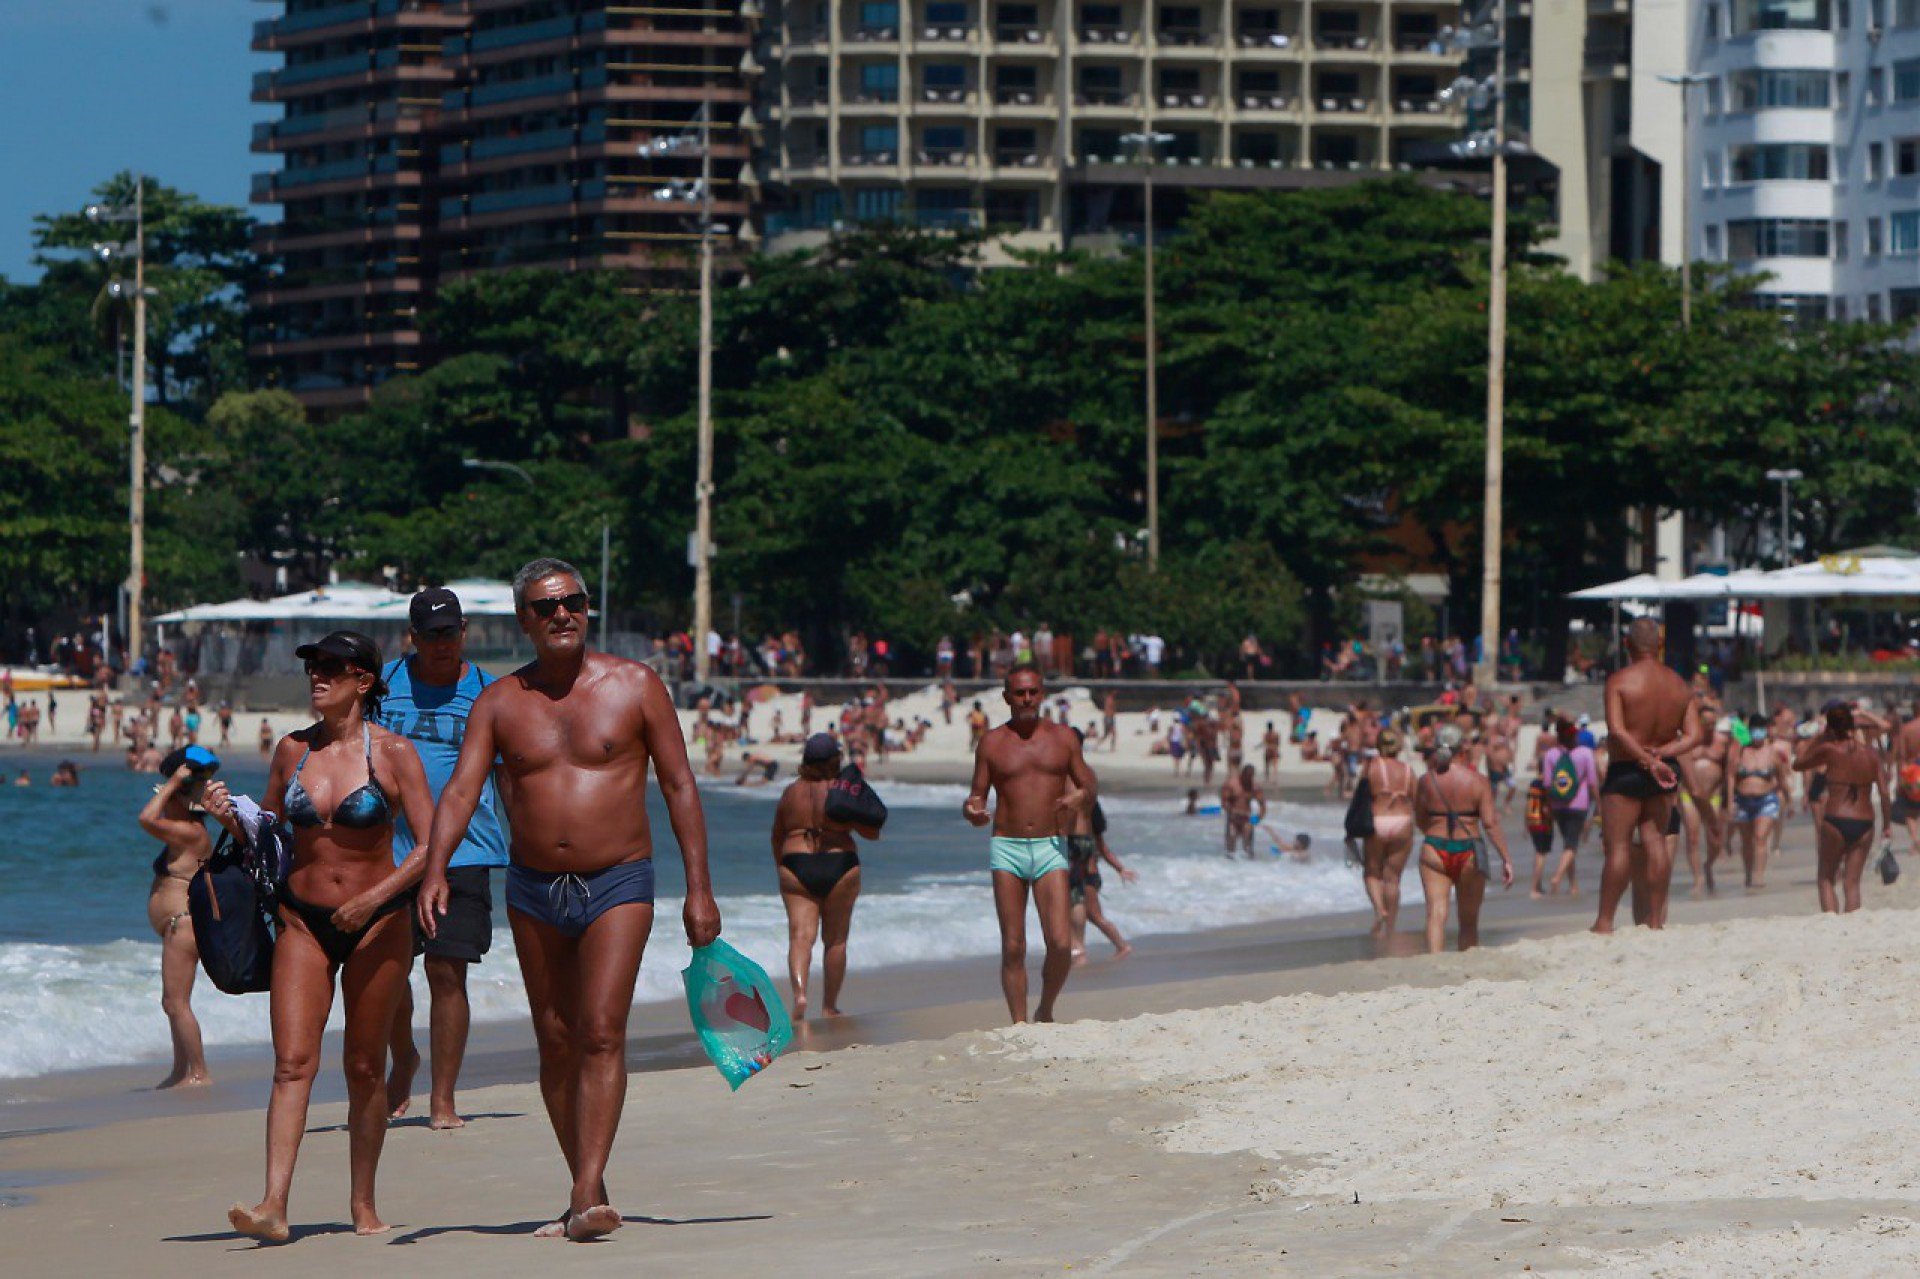 Fotos da praia de Copacabana lotada neste domingo - Luciano Belford